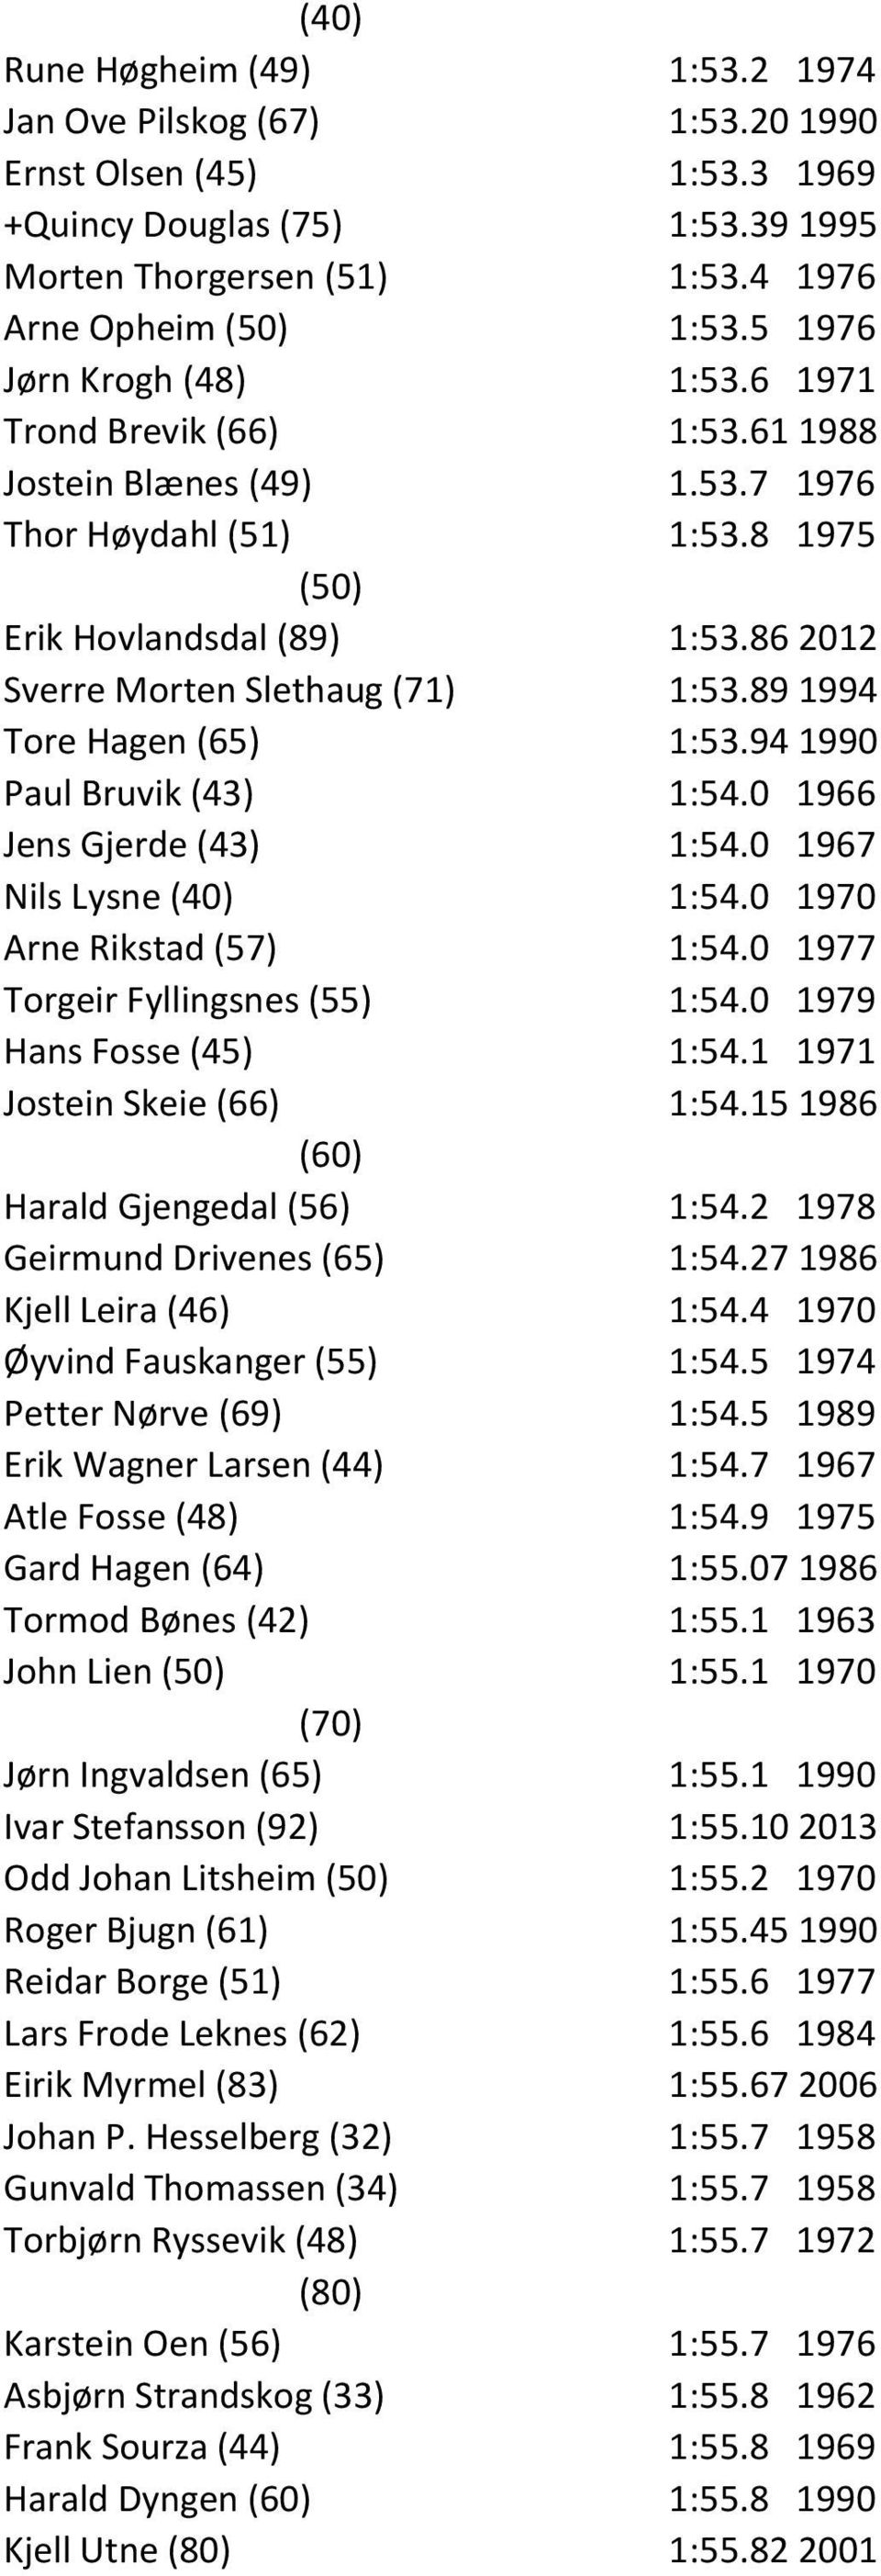 86 2012 Sverre Morten Slethaug (71) 1:53.89 1994 Tore Hagen (65) 1:53.94 1990 Paul Bruvik (43) 1:54.0 1966 Jens Gjerde (43) 1:54.0 1967 Nils Lysne (40) 1:54.0 1970 Arne Rikstad (57) 1:54.